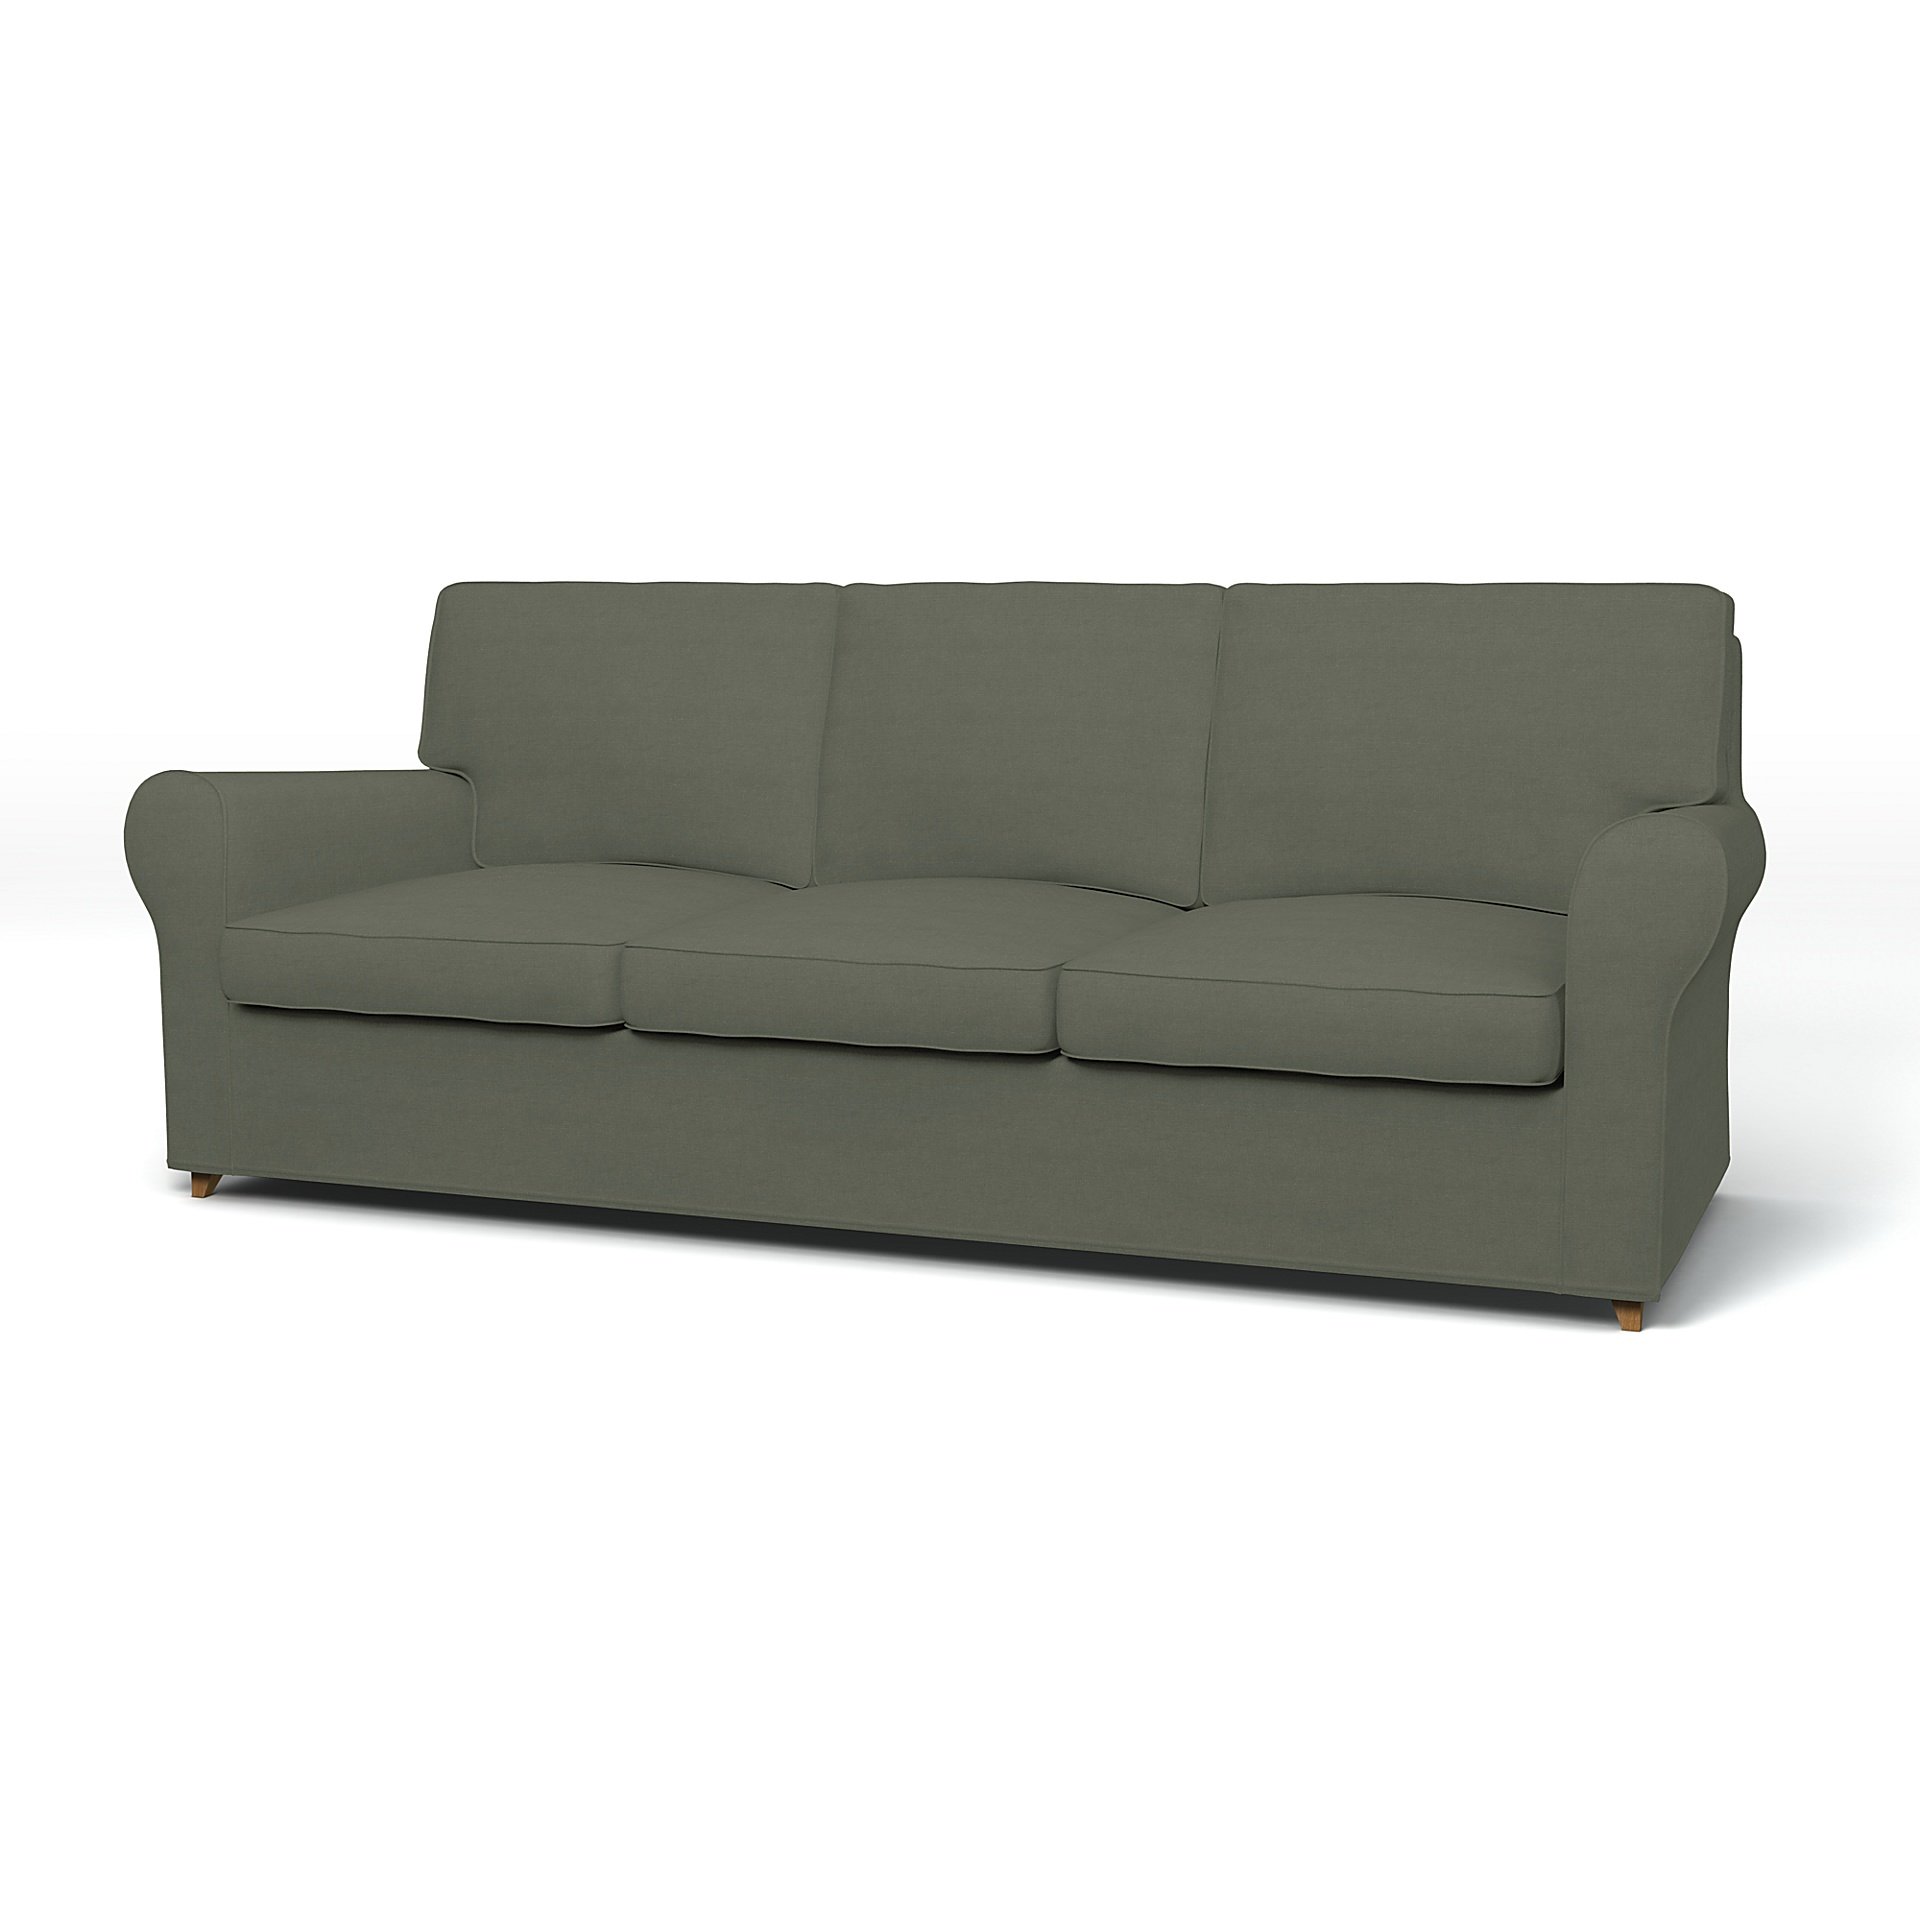 IKEA - Angby 3 Seater Sofa Cover, Rosemary, Linen - Bemz